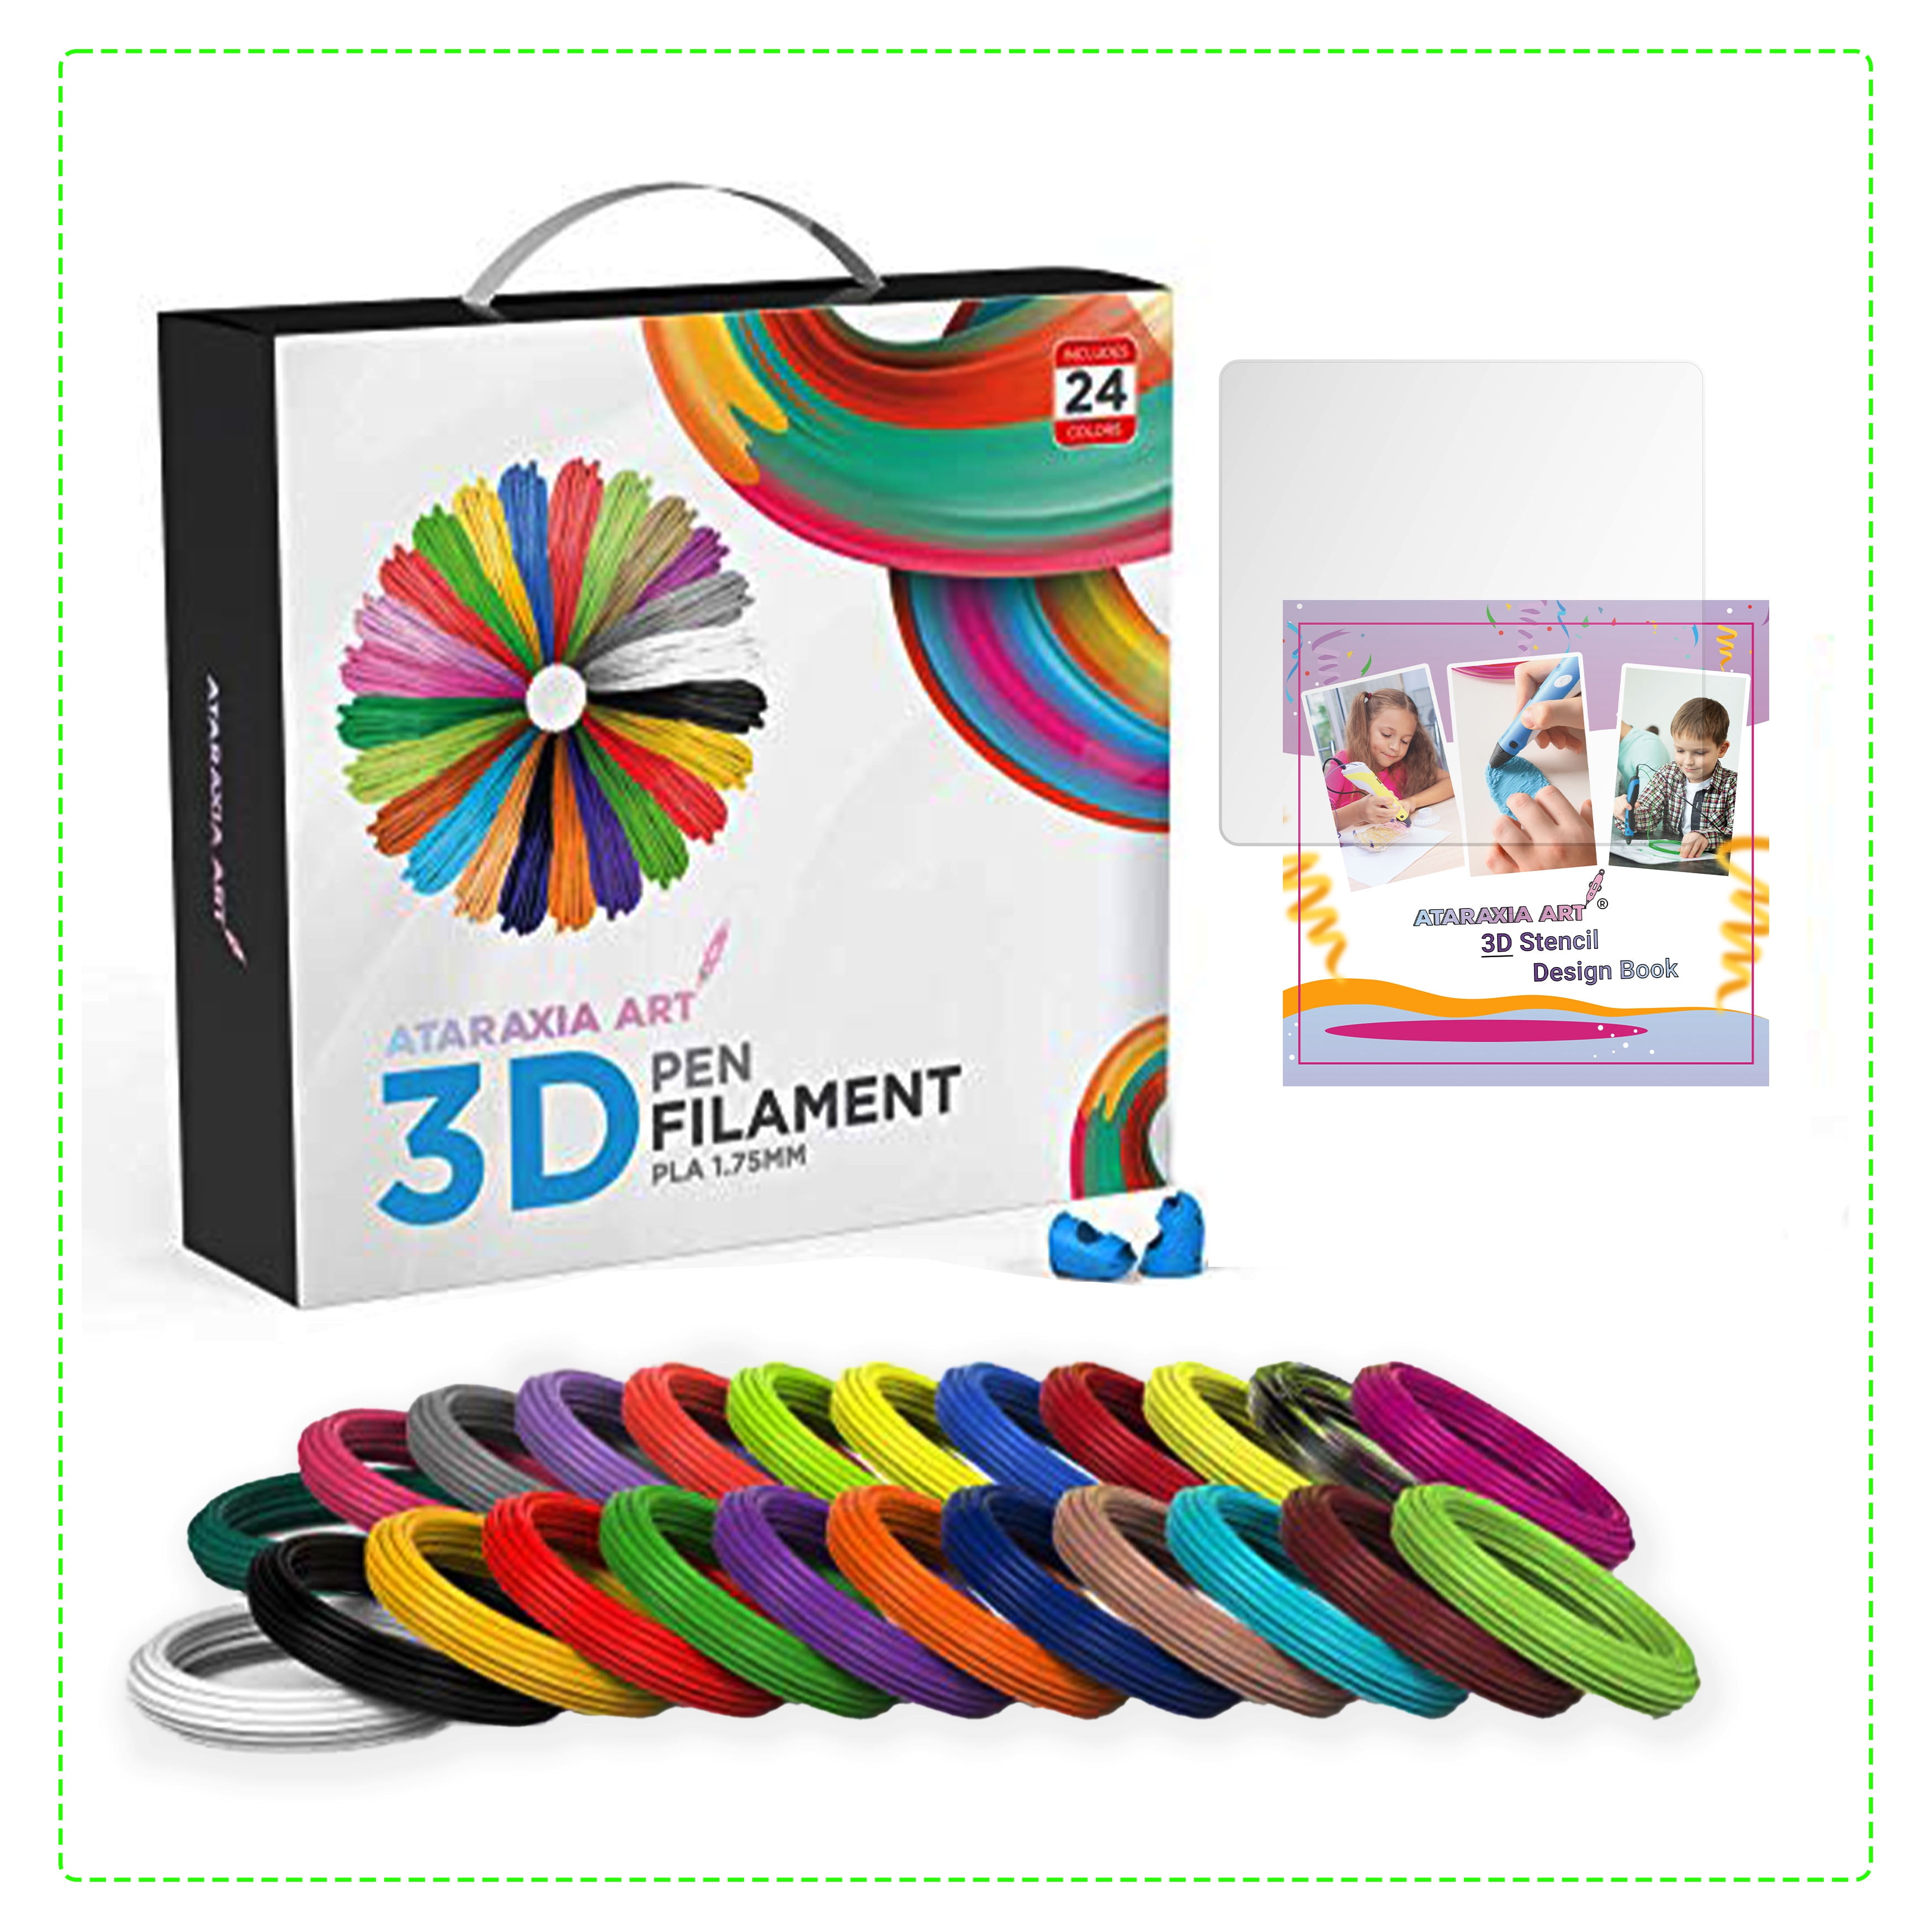 ATARAXIA ART 3D Pen Filament Refills, 24 Colors, each 33 feet total 782  feet, 3DPen filament with Stencils book, Reusable Colorful 40 Pattern  printing paper with clear PVC pad & 2 finger protectors 